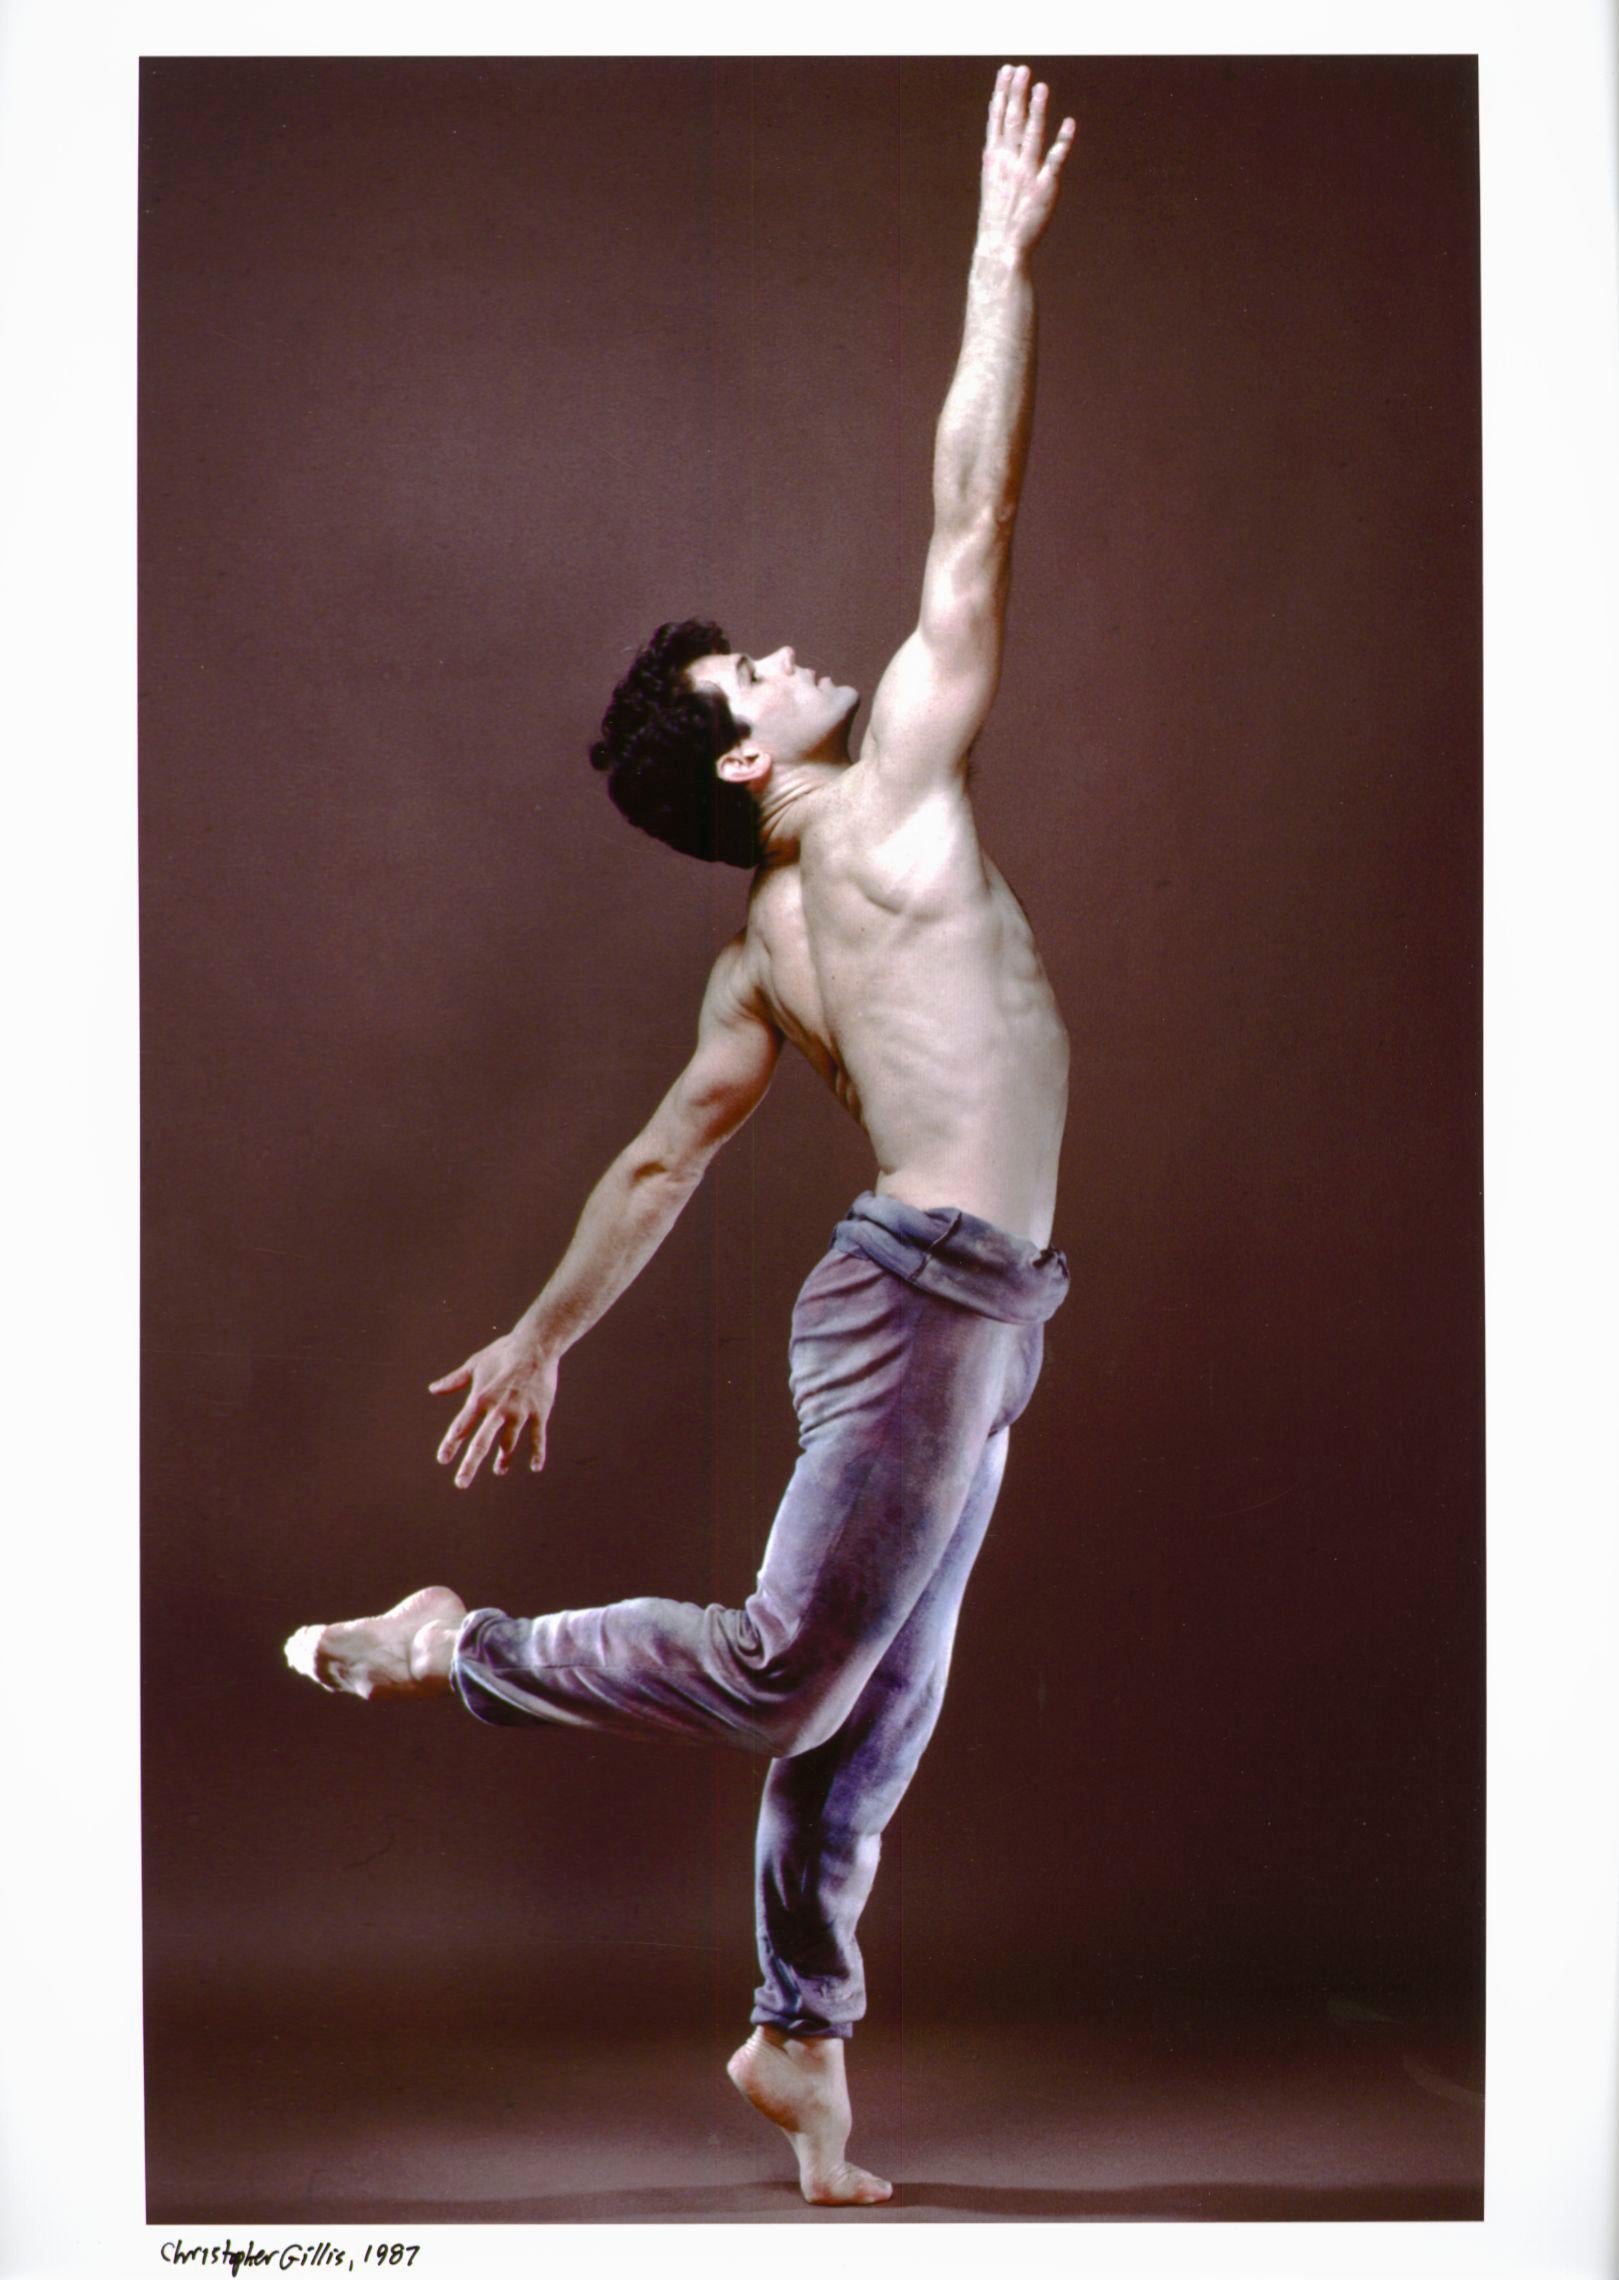 Jack Mitchell Color Photograph - Choreographer & principal dancer with the Paul Taylor Company Christopher Gillis